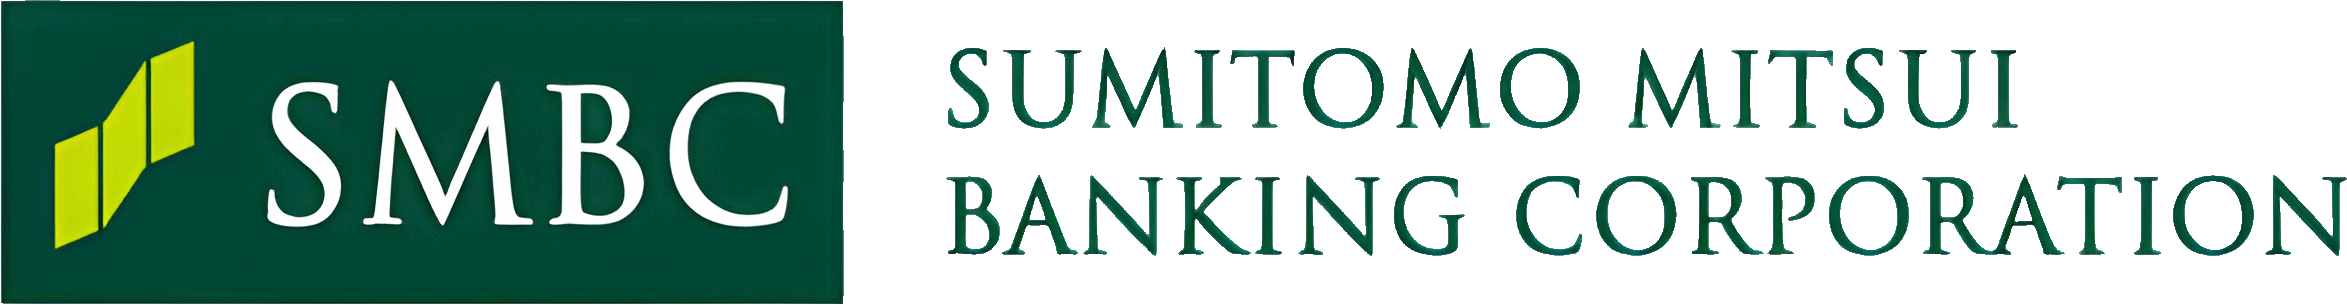 Sumitomo Mitsui Banking Corporation | Lead investor